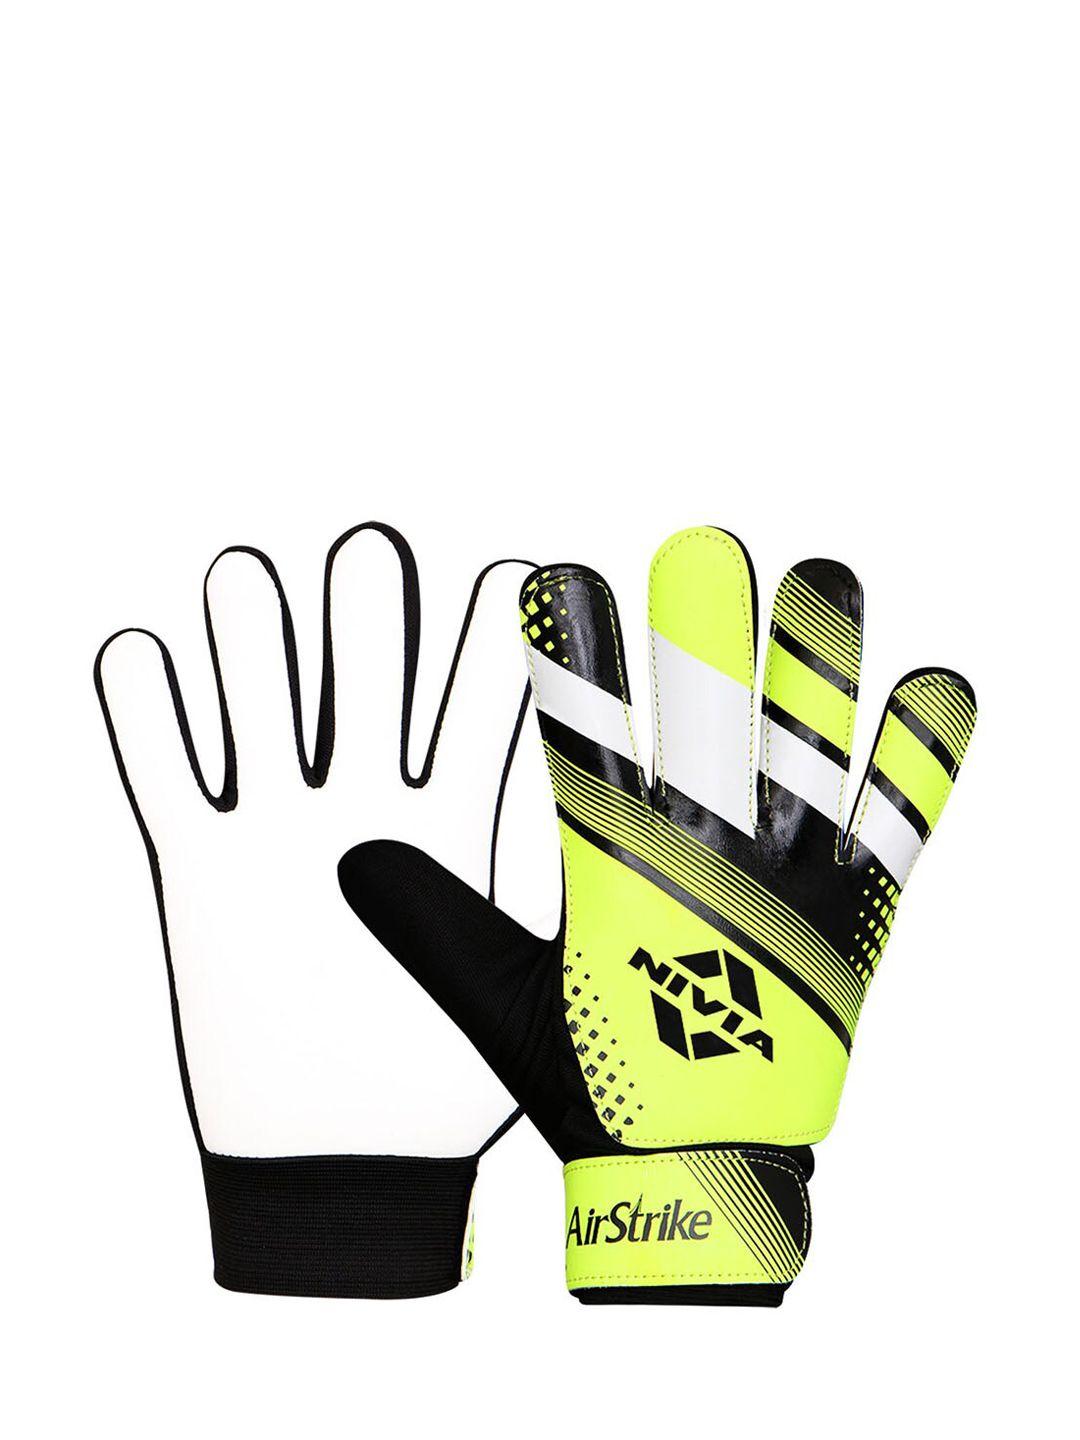 nivia men printed goalkeeper gloves